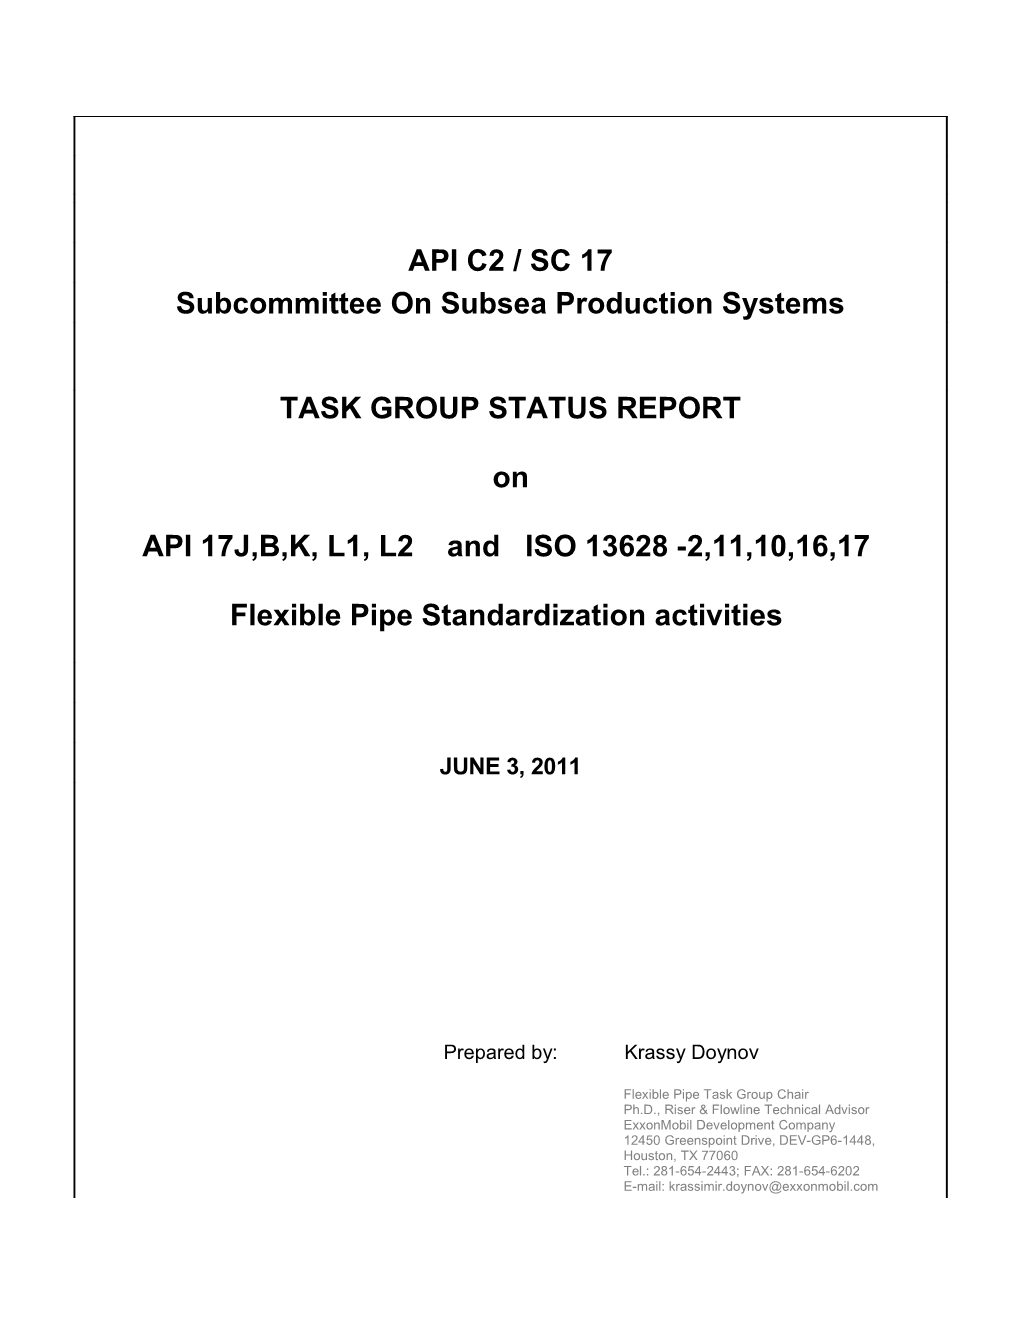 API 17 B,J,K,L and ISO 13628-2,-11,-10,-16,-17